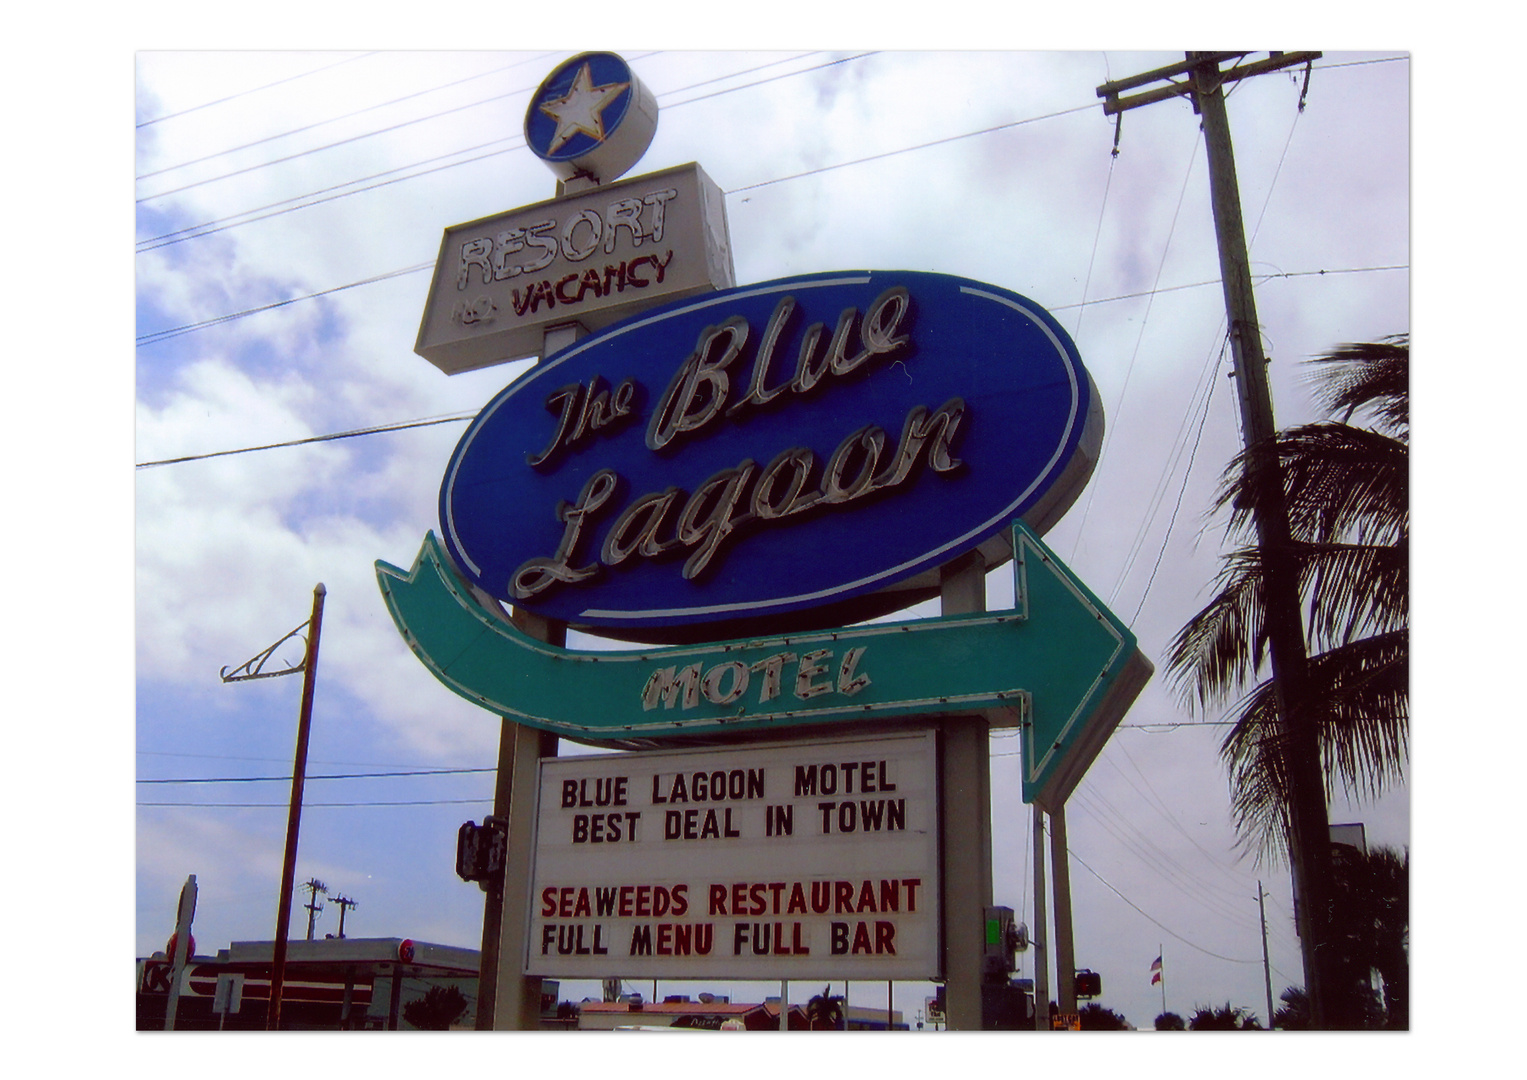 The Blue Lagoon Motel